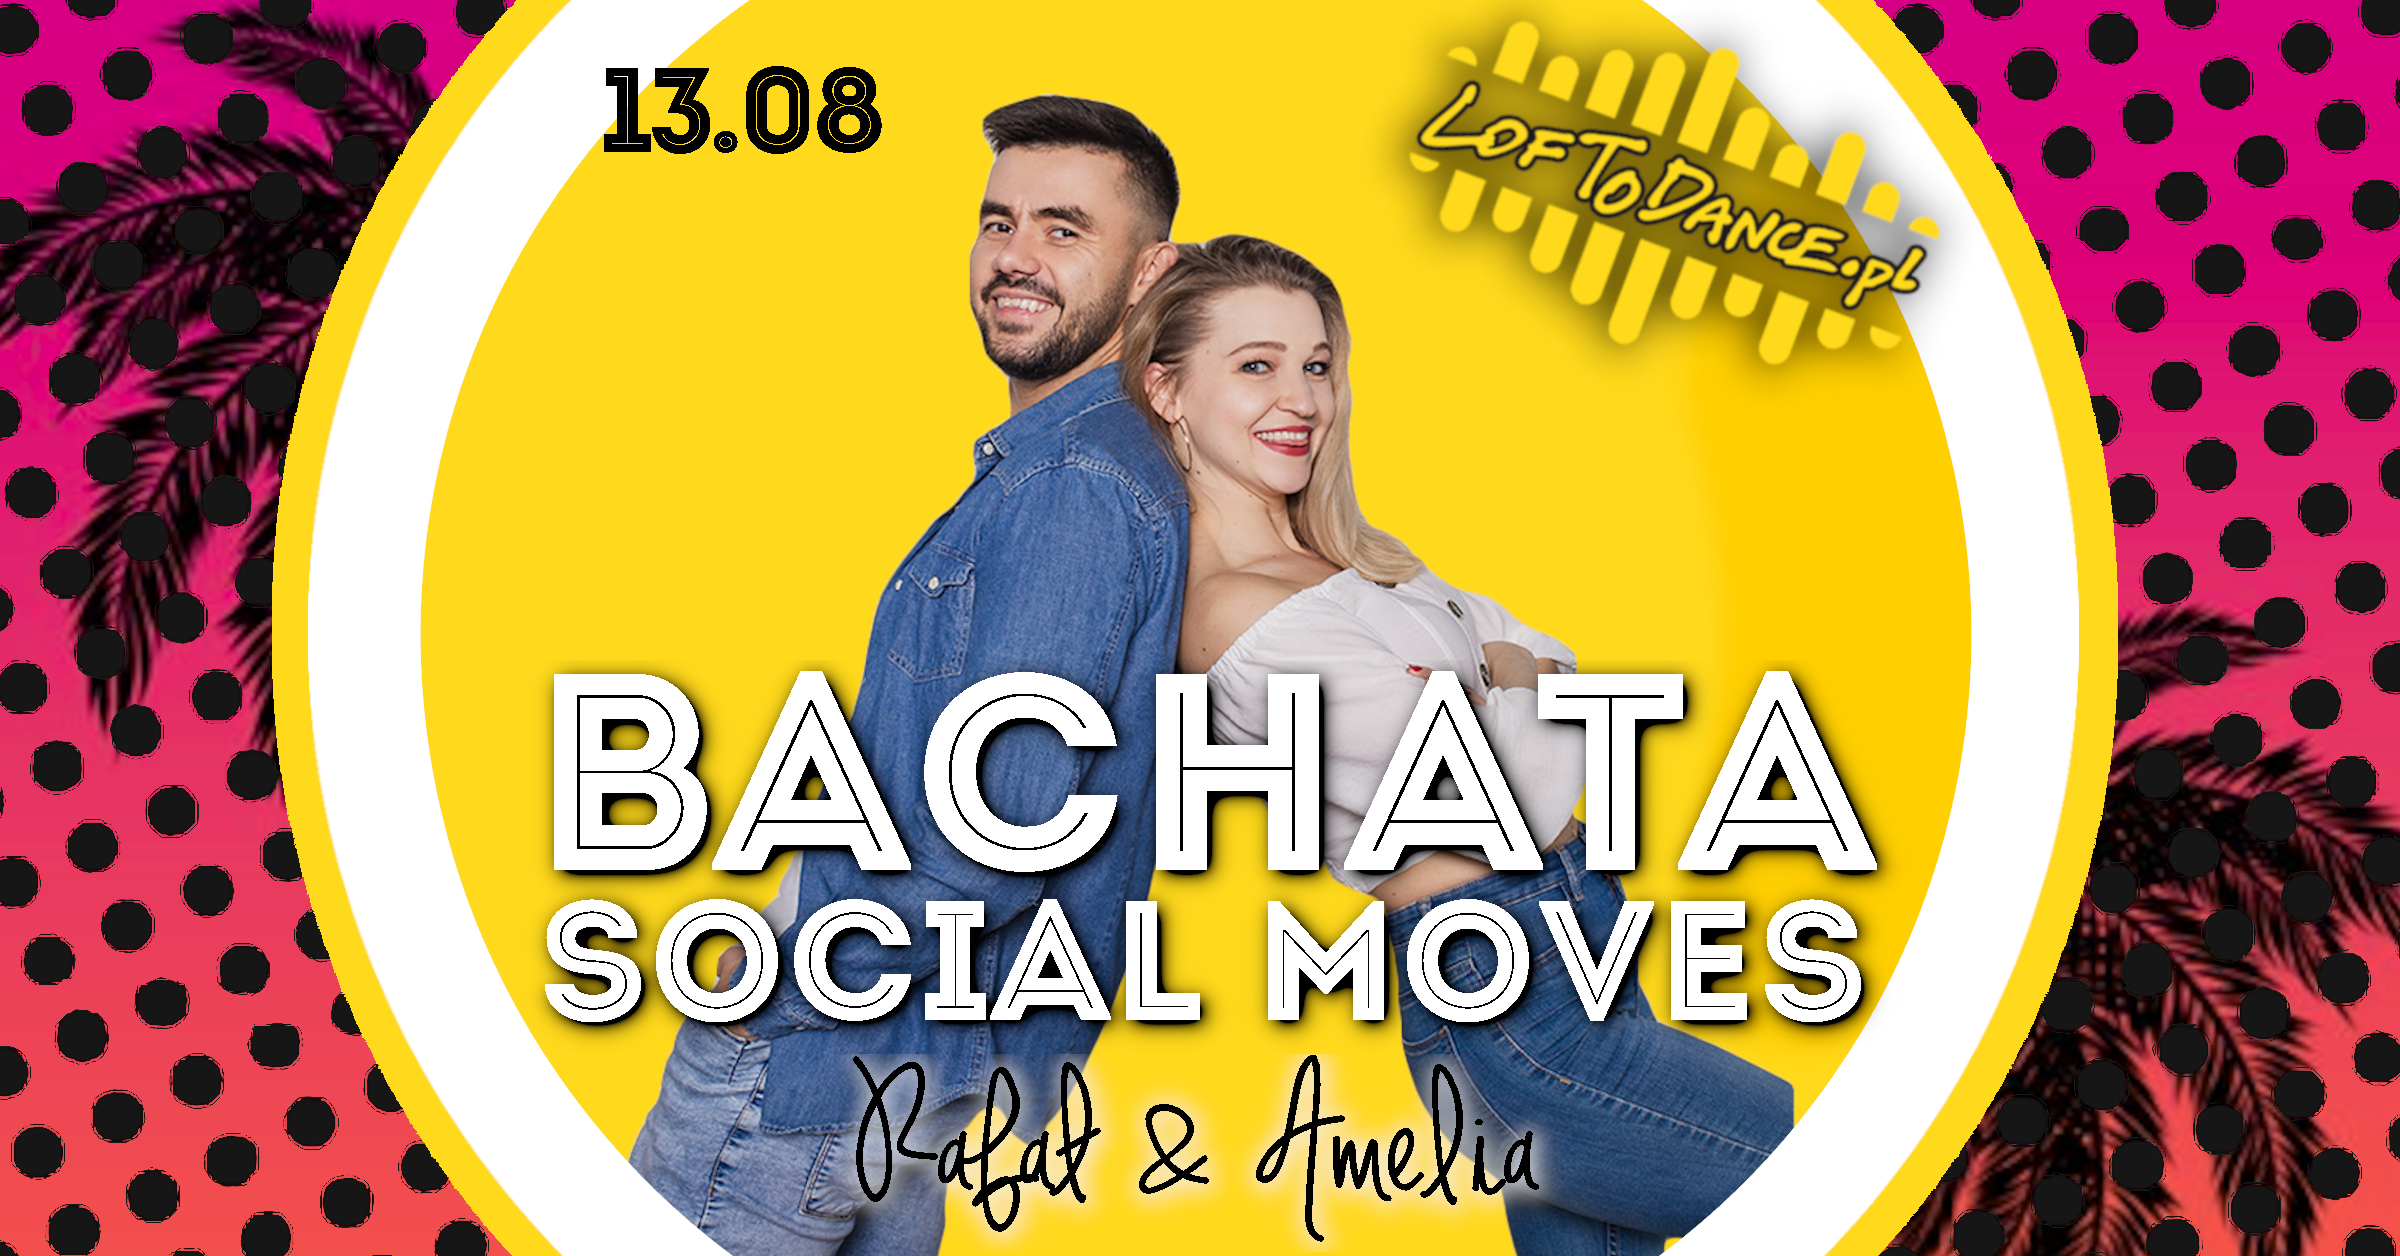 Bachata social moves by Rafał & Amelia - sklep Loftodance